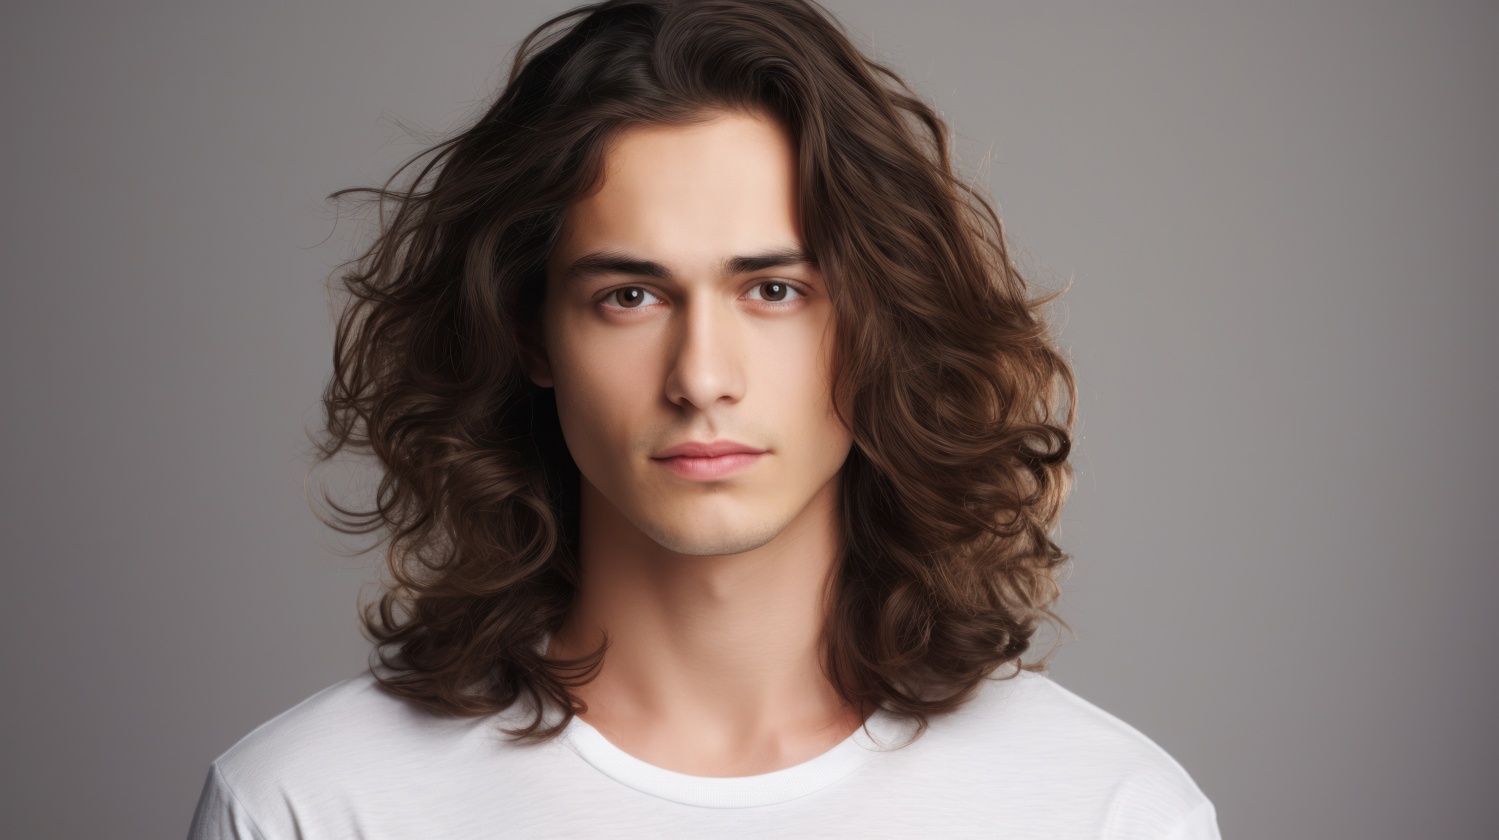 man - long curly hair